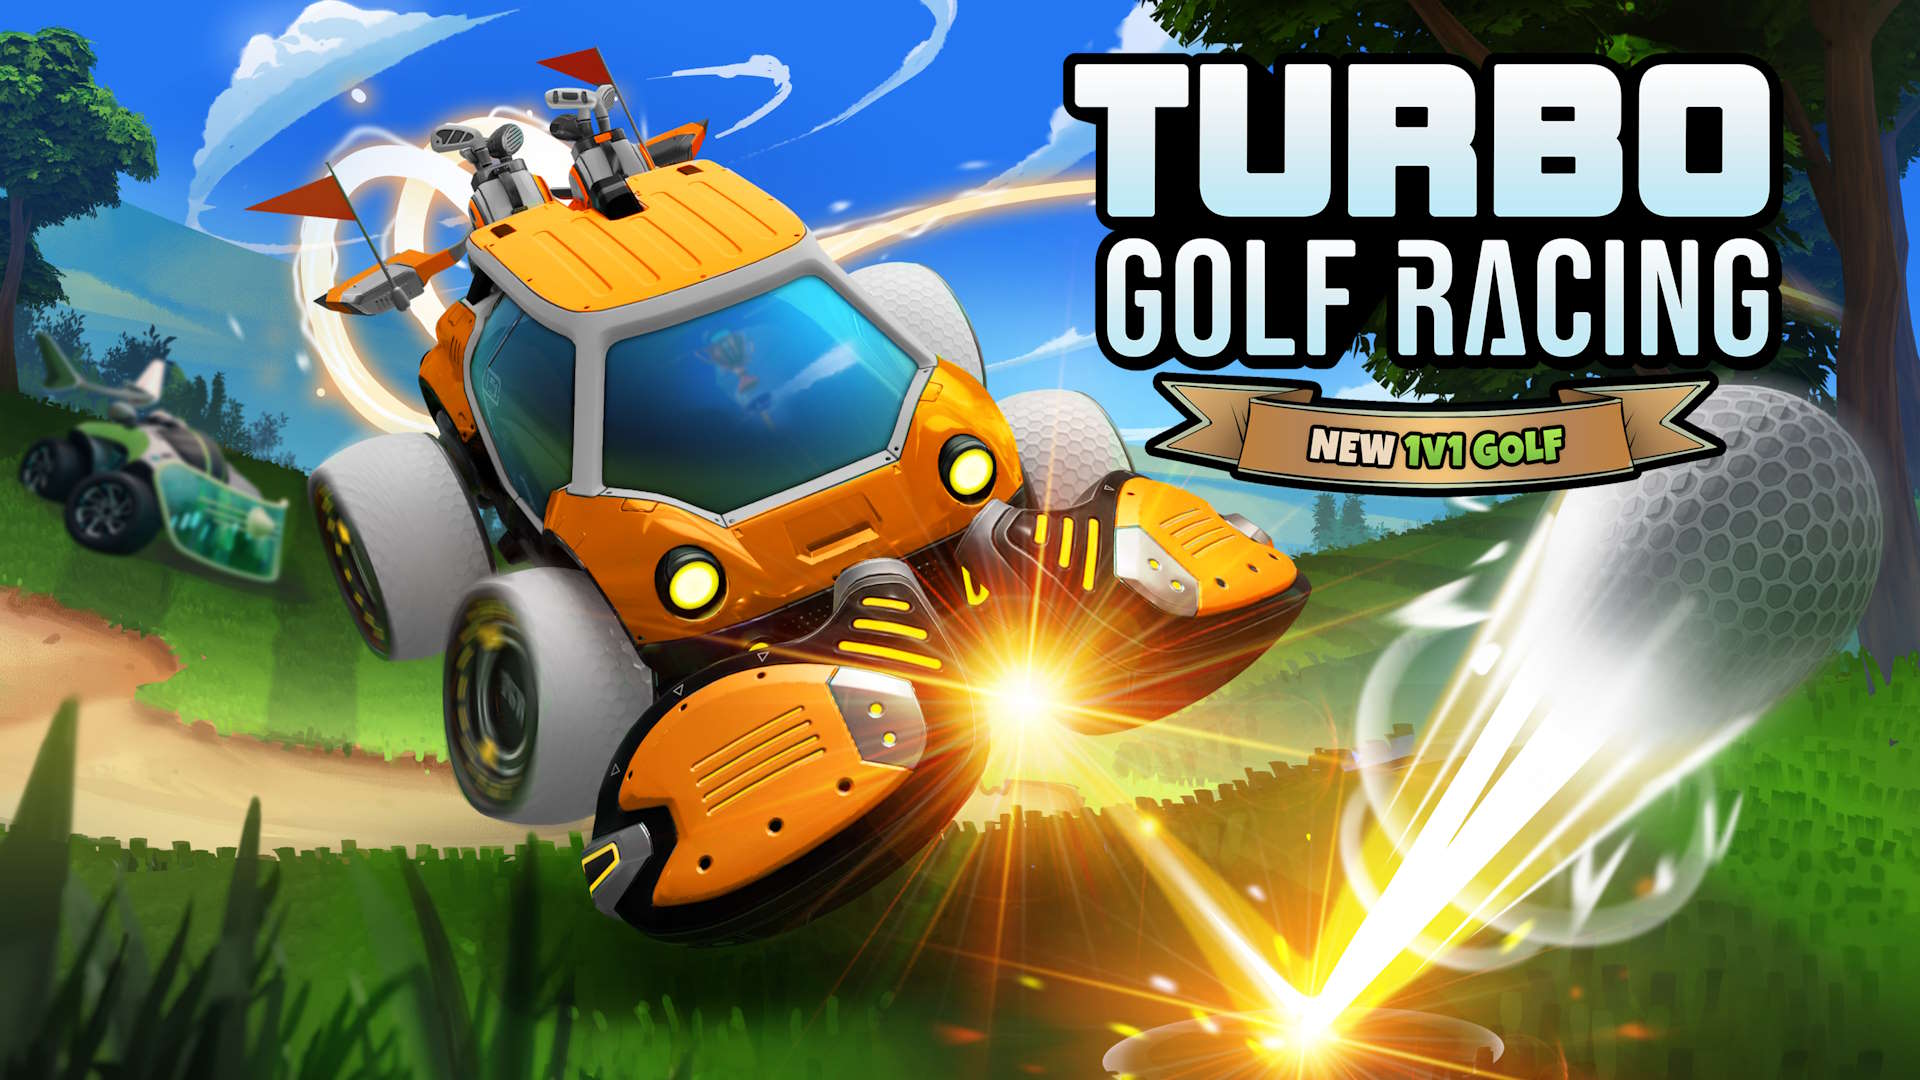 Turbo Golf Racing Golf mode key art, showing an orange rocket-powered vehicle colliding with a golf ball.